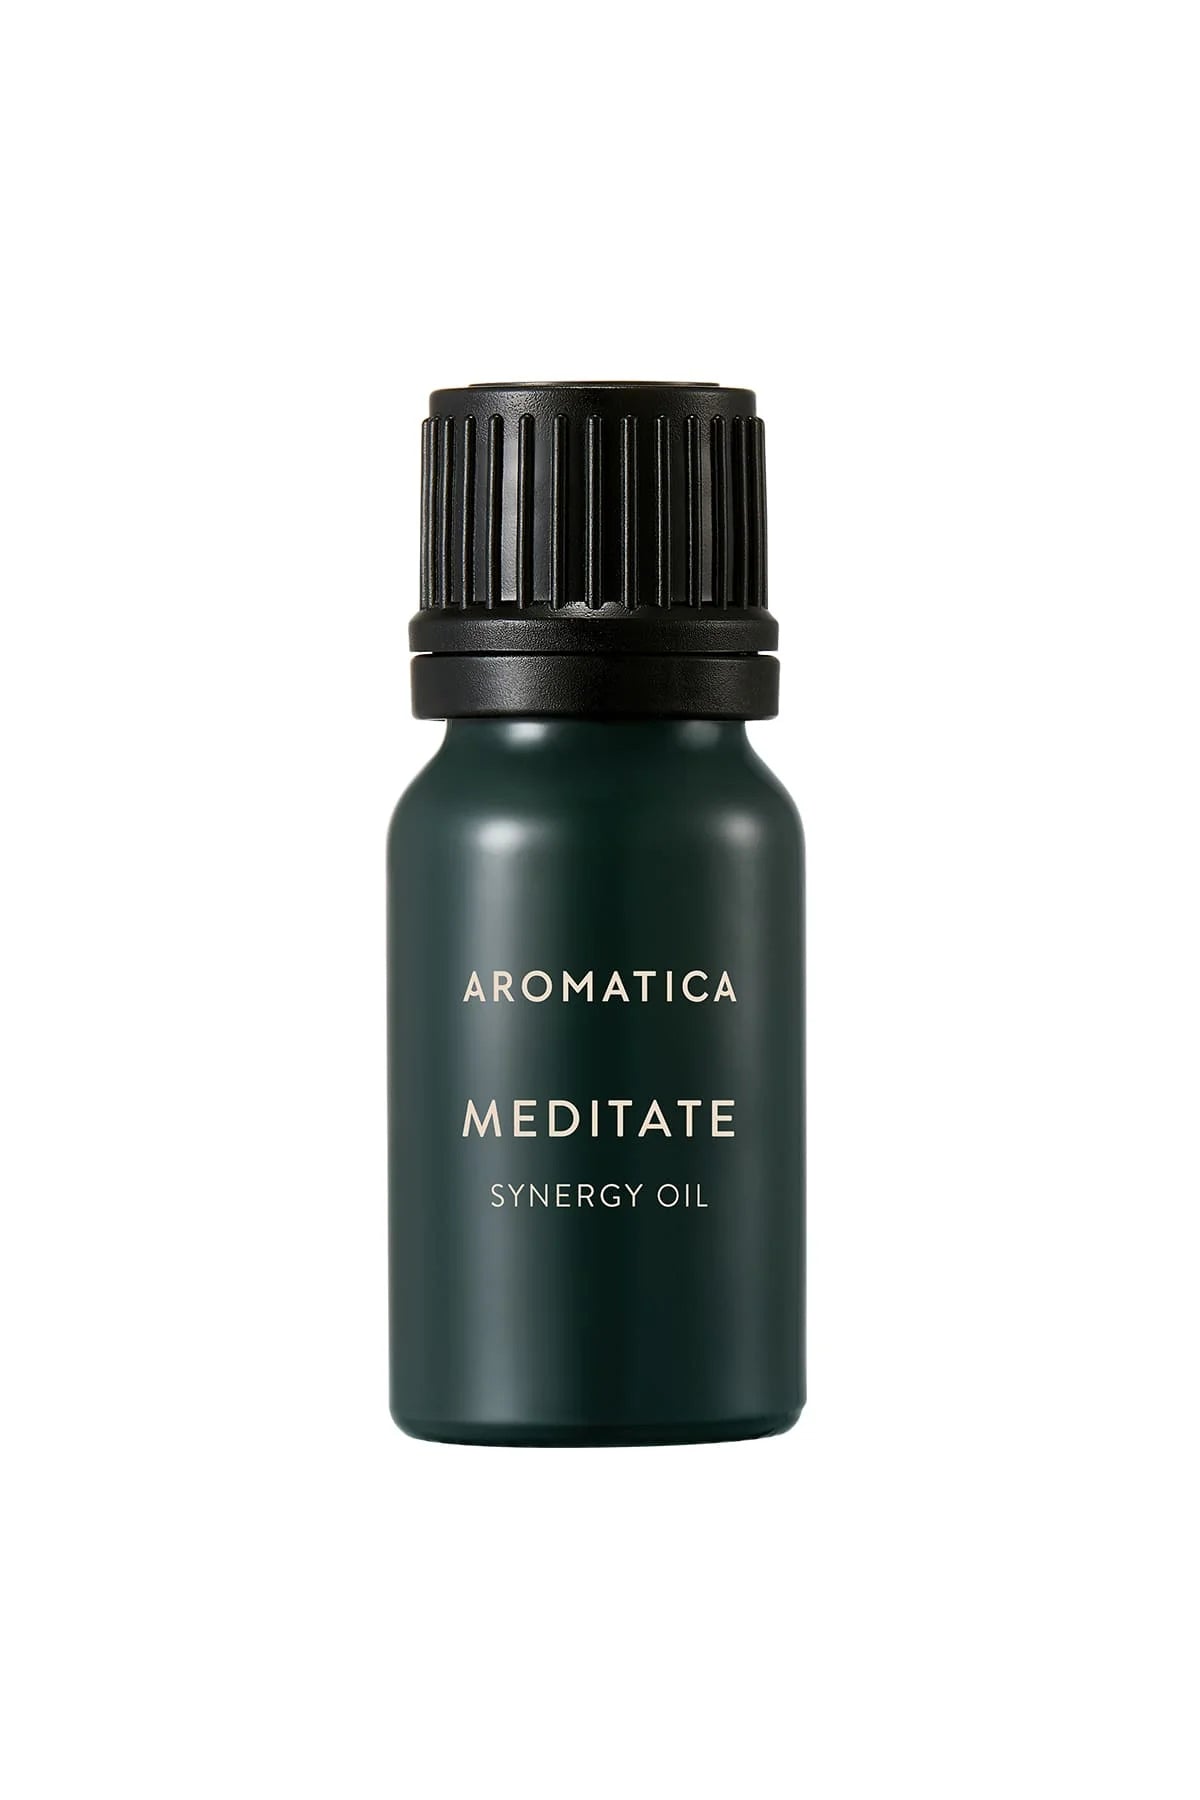 Aromatica Meditate Synergy Oil